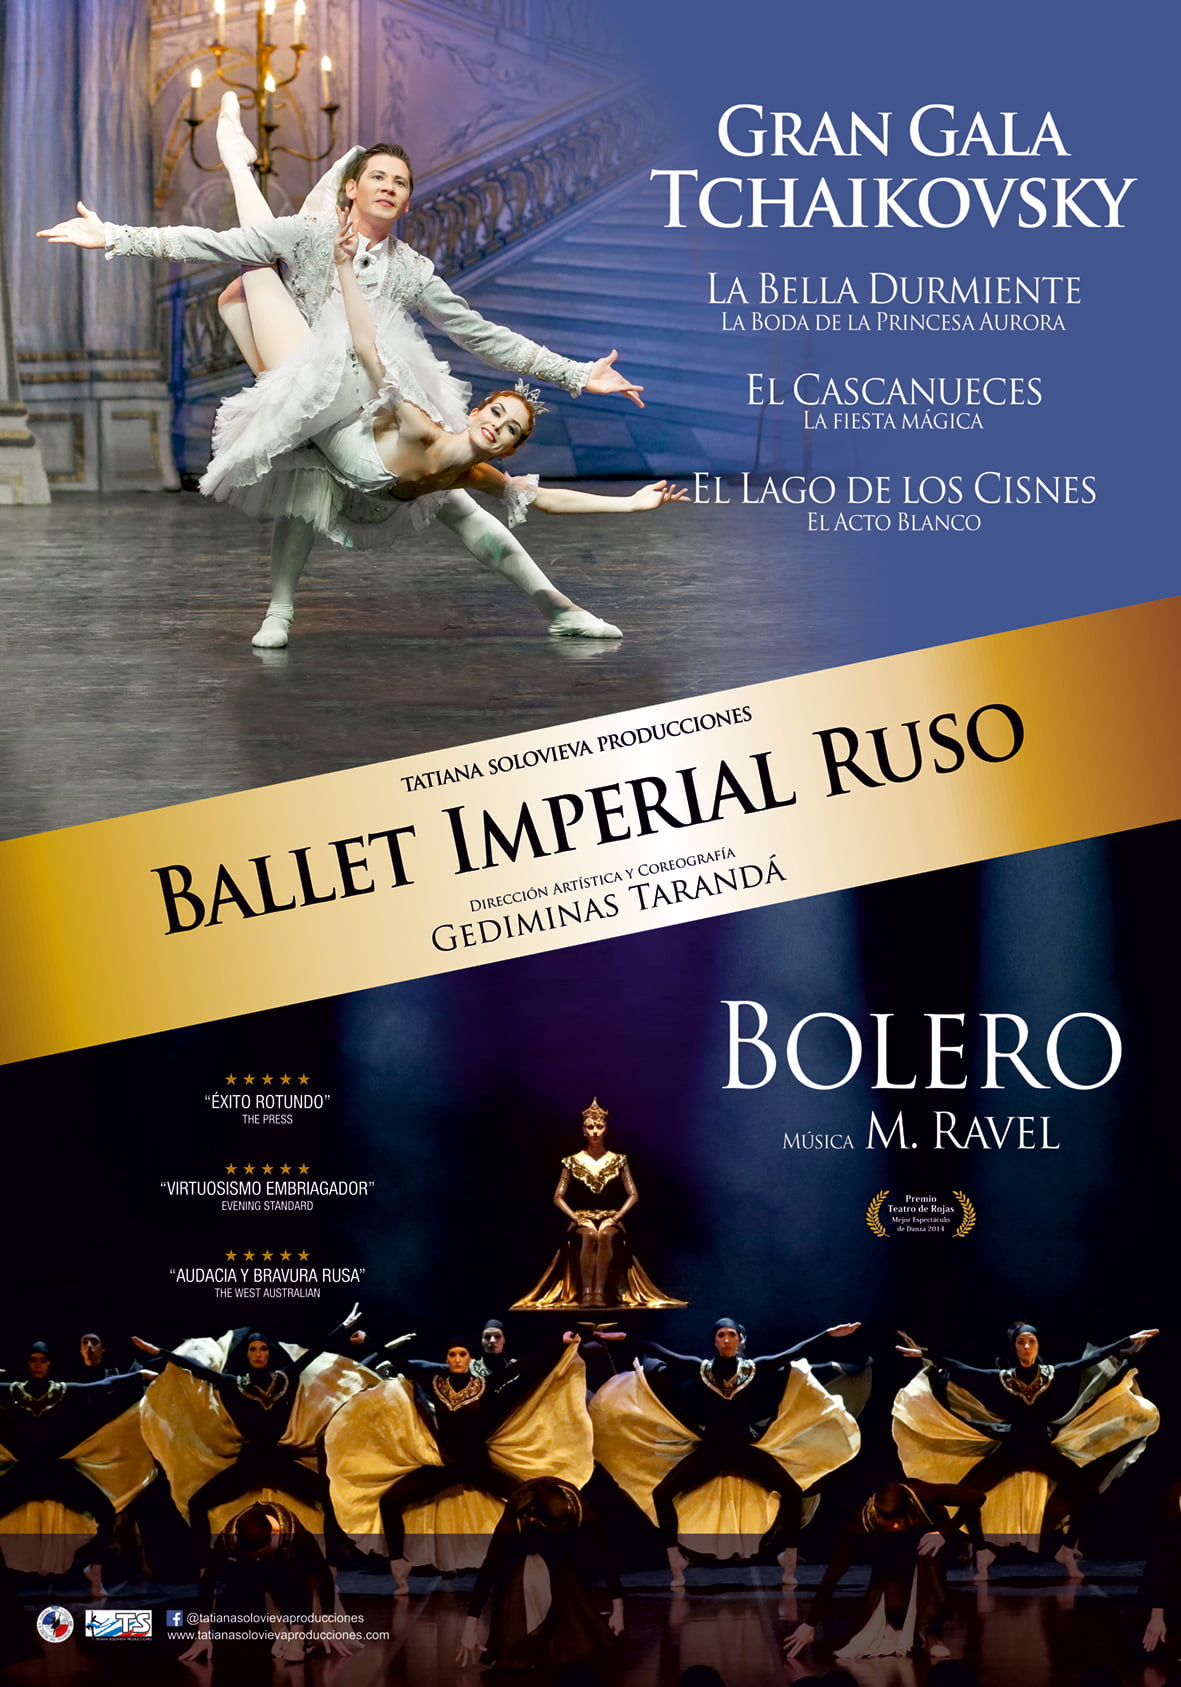 Isla Cristina acoge la Gran Gala del Ballet Imperial Ruso